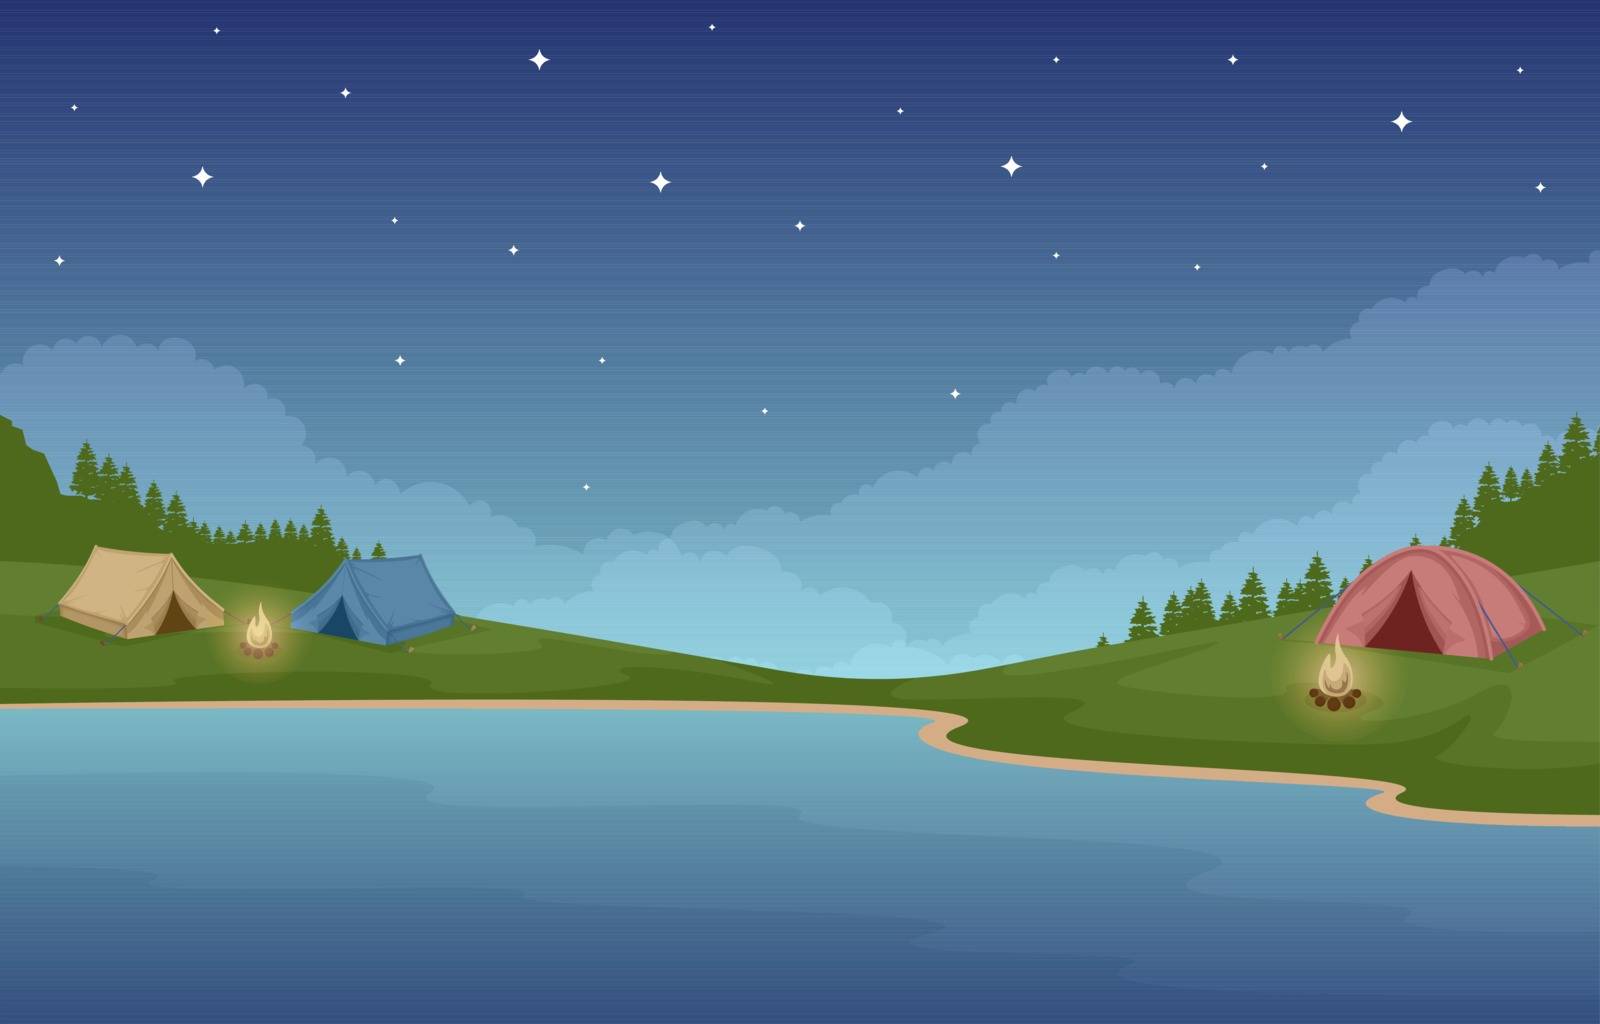 Camping Adventure Outdoor Park Lake Nature Landscape Cartoon Illustration